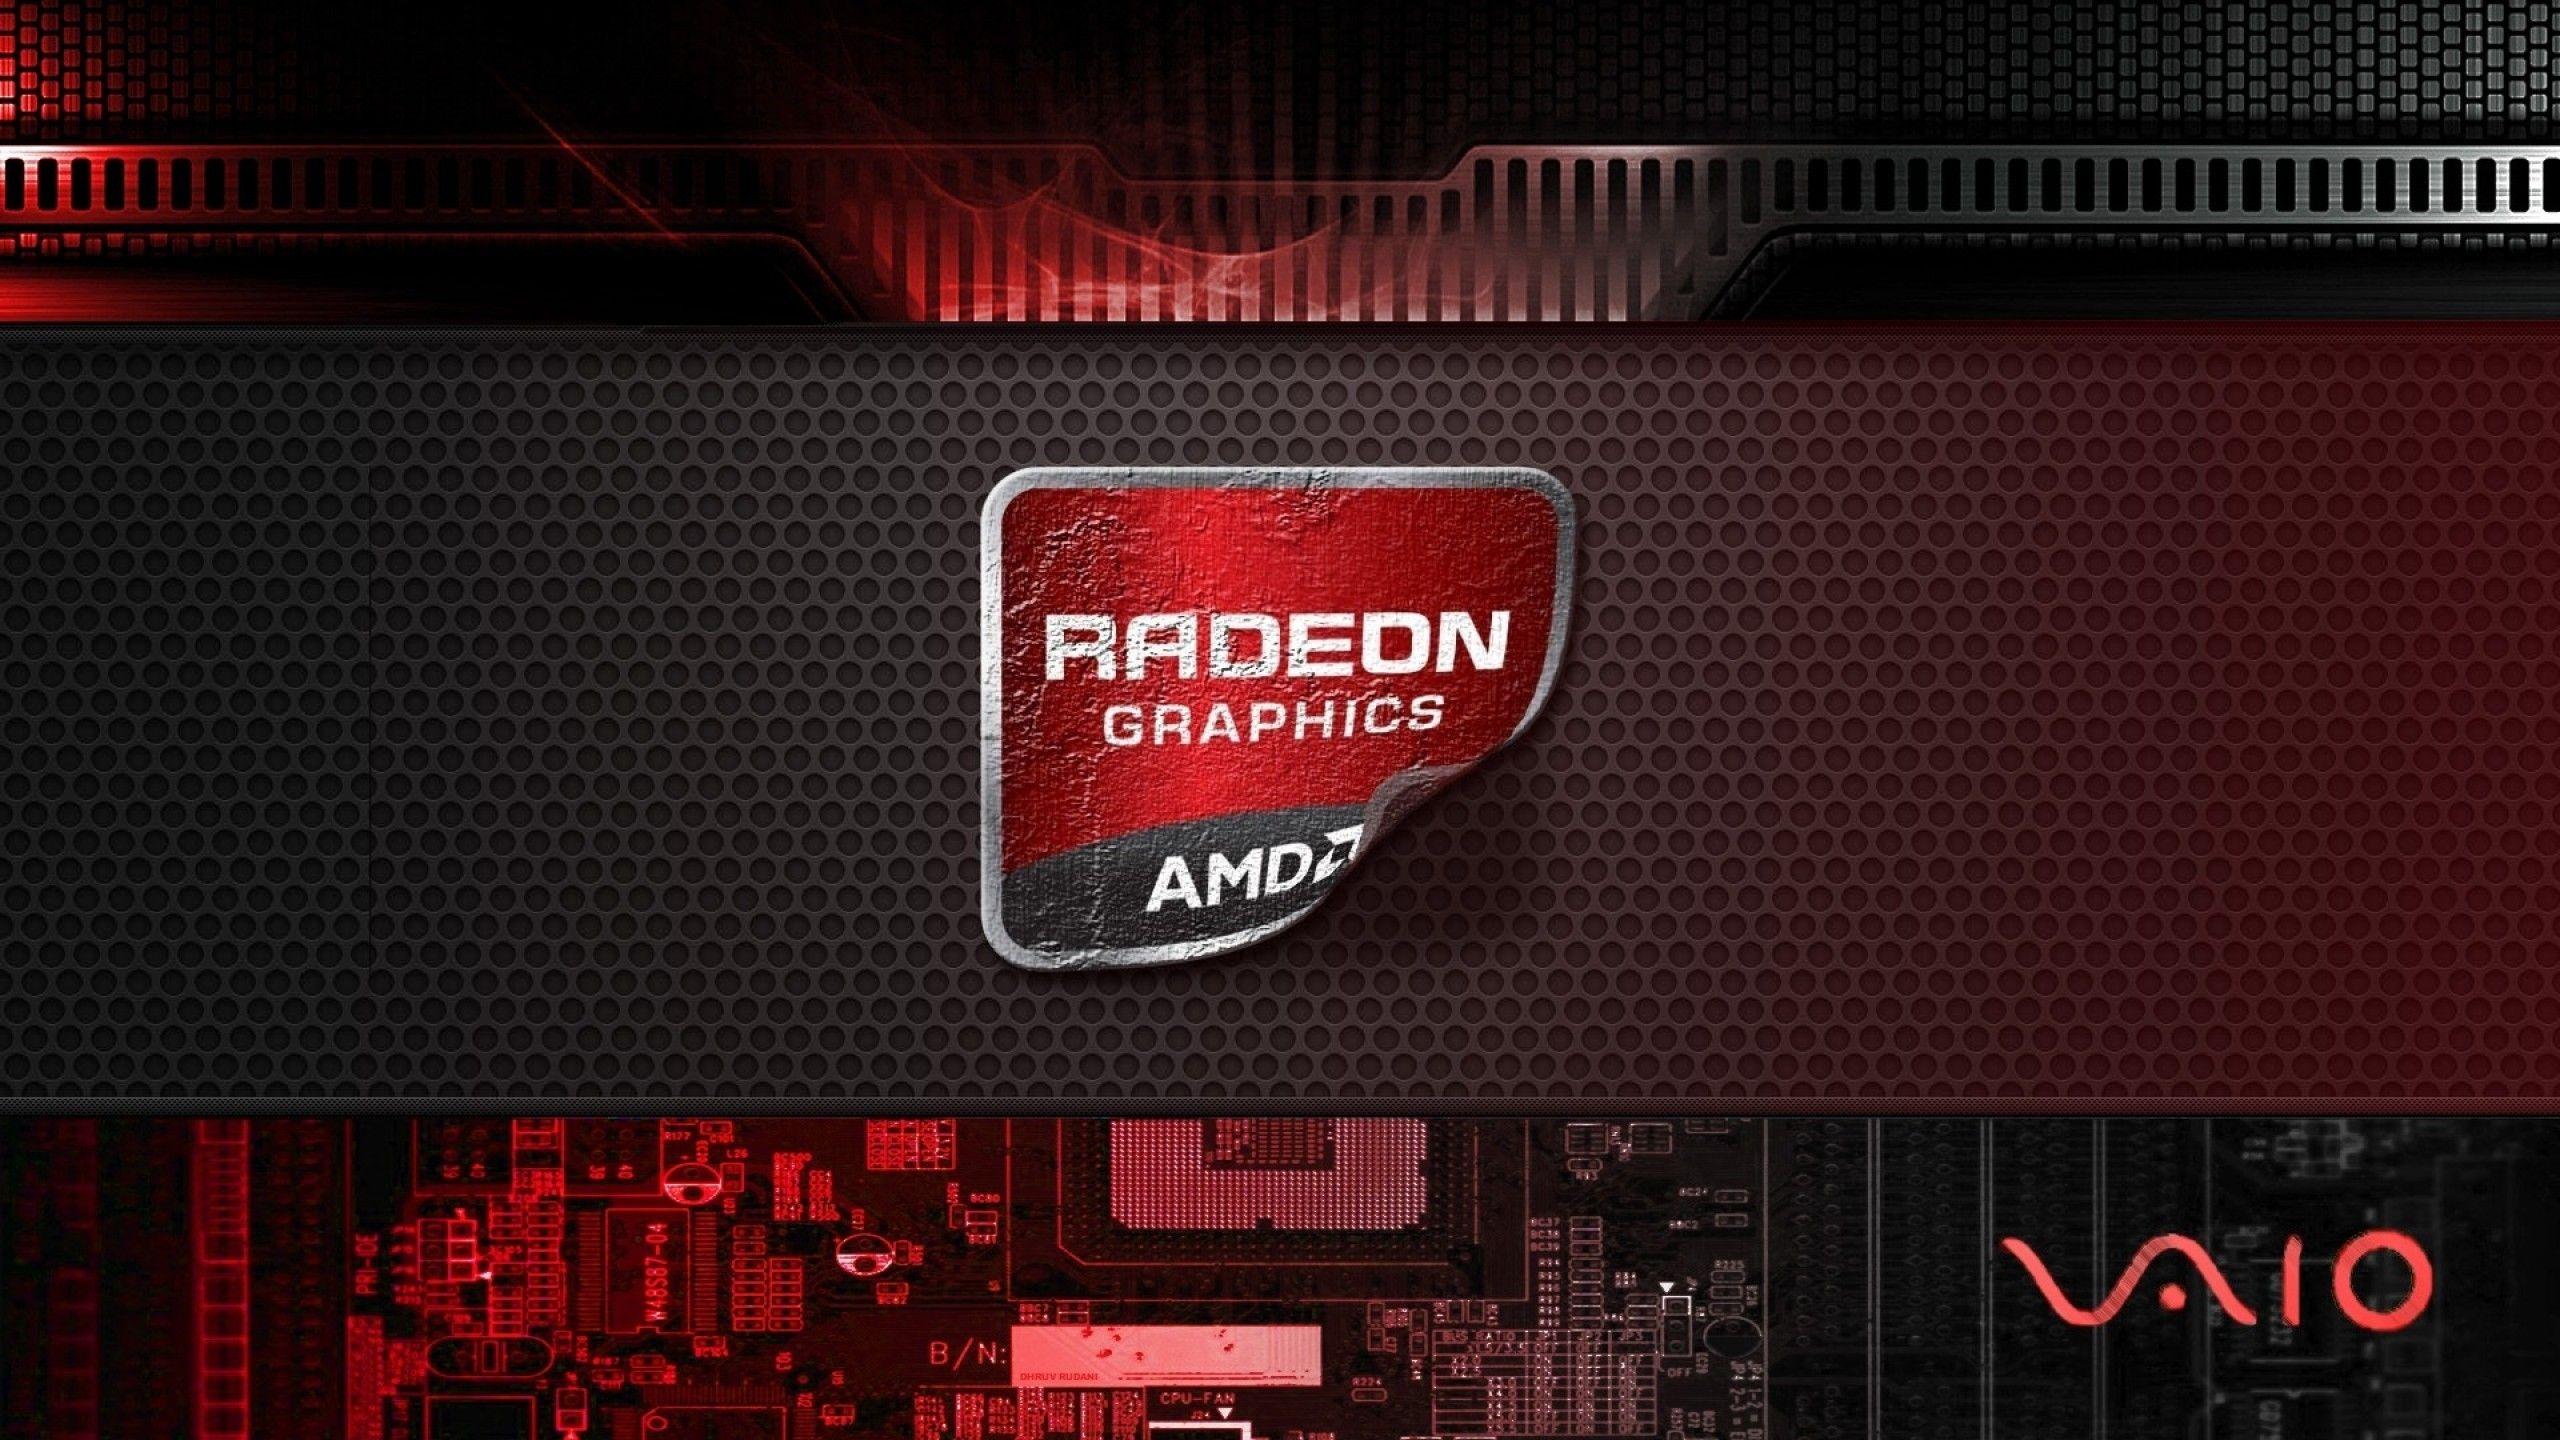 Игры для амд радеон. АМД видеокарты 1080. Фон рабочего стола АМД. AMD Radeon обои. Обои на рабочий стол радеон.